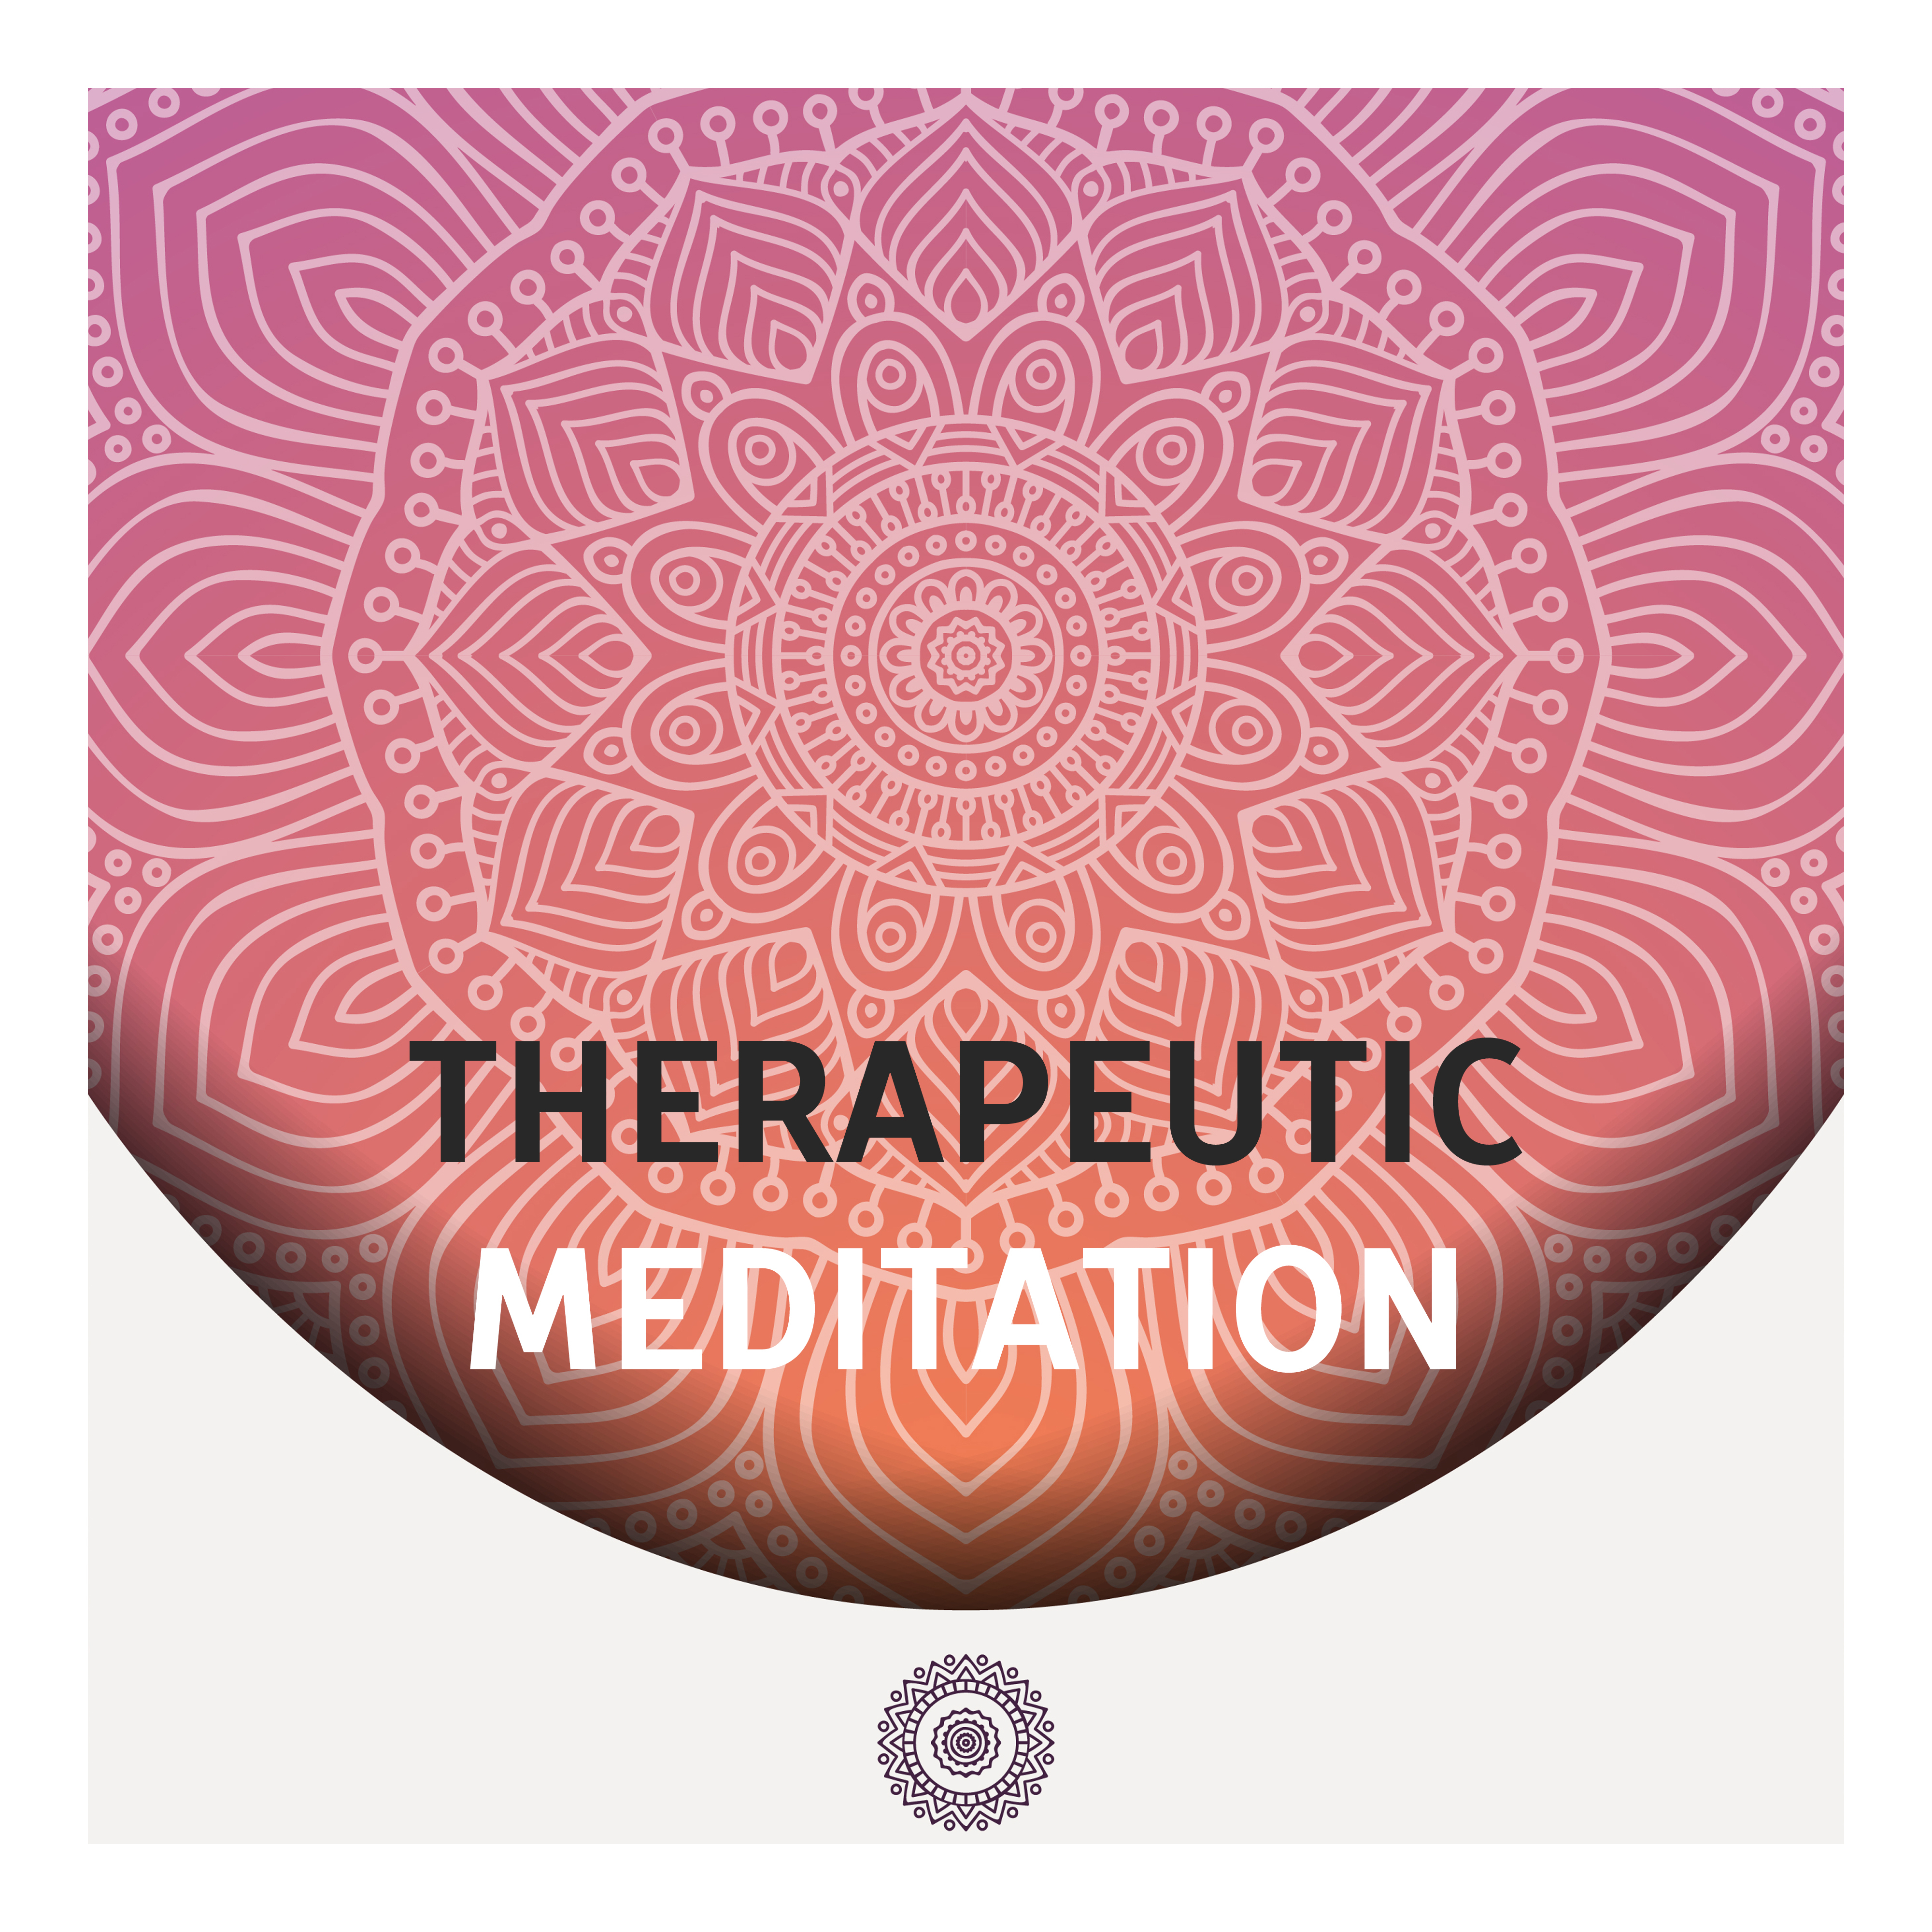 Therapeutic Meditation